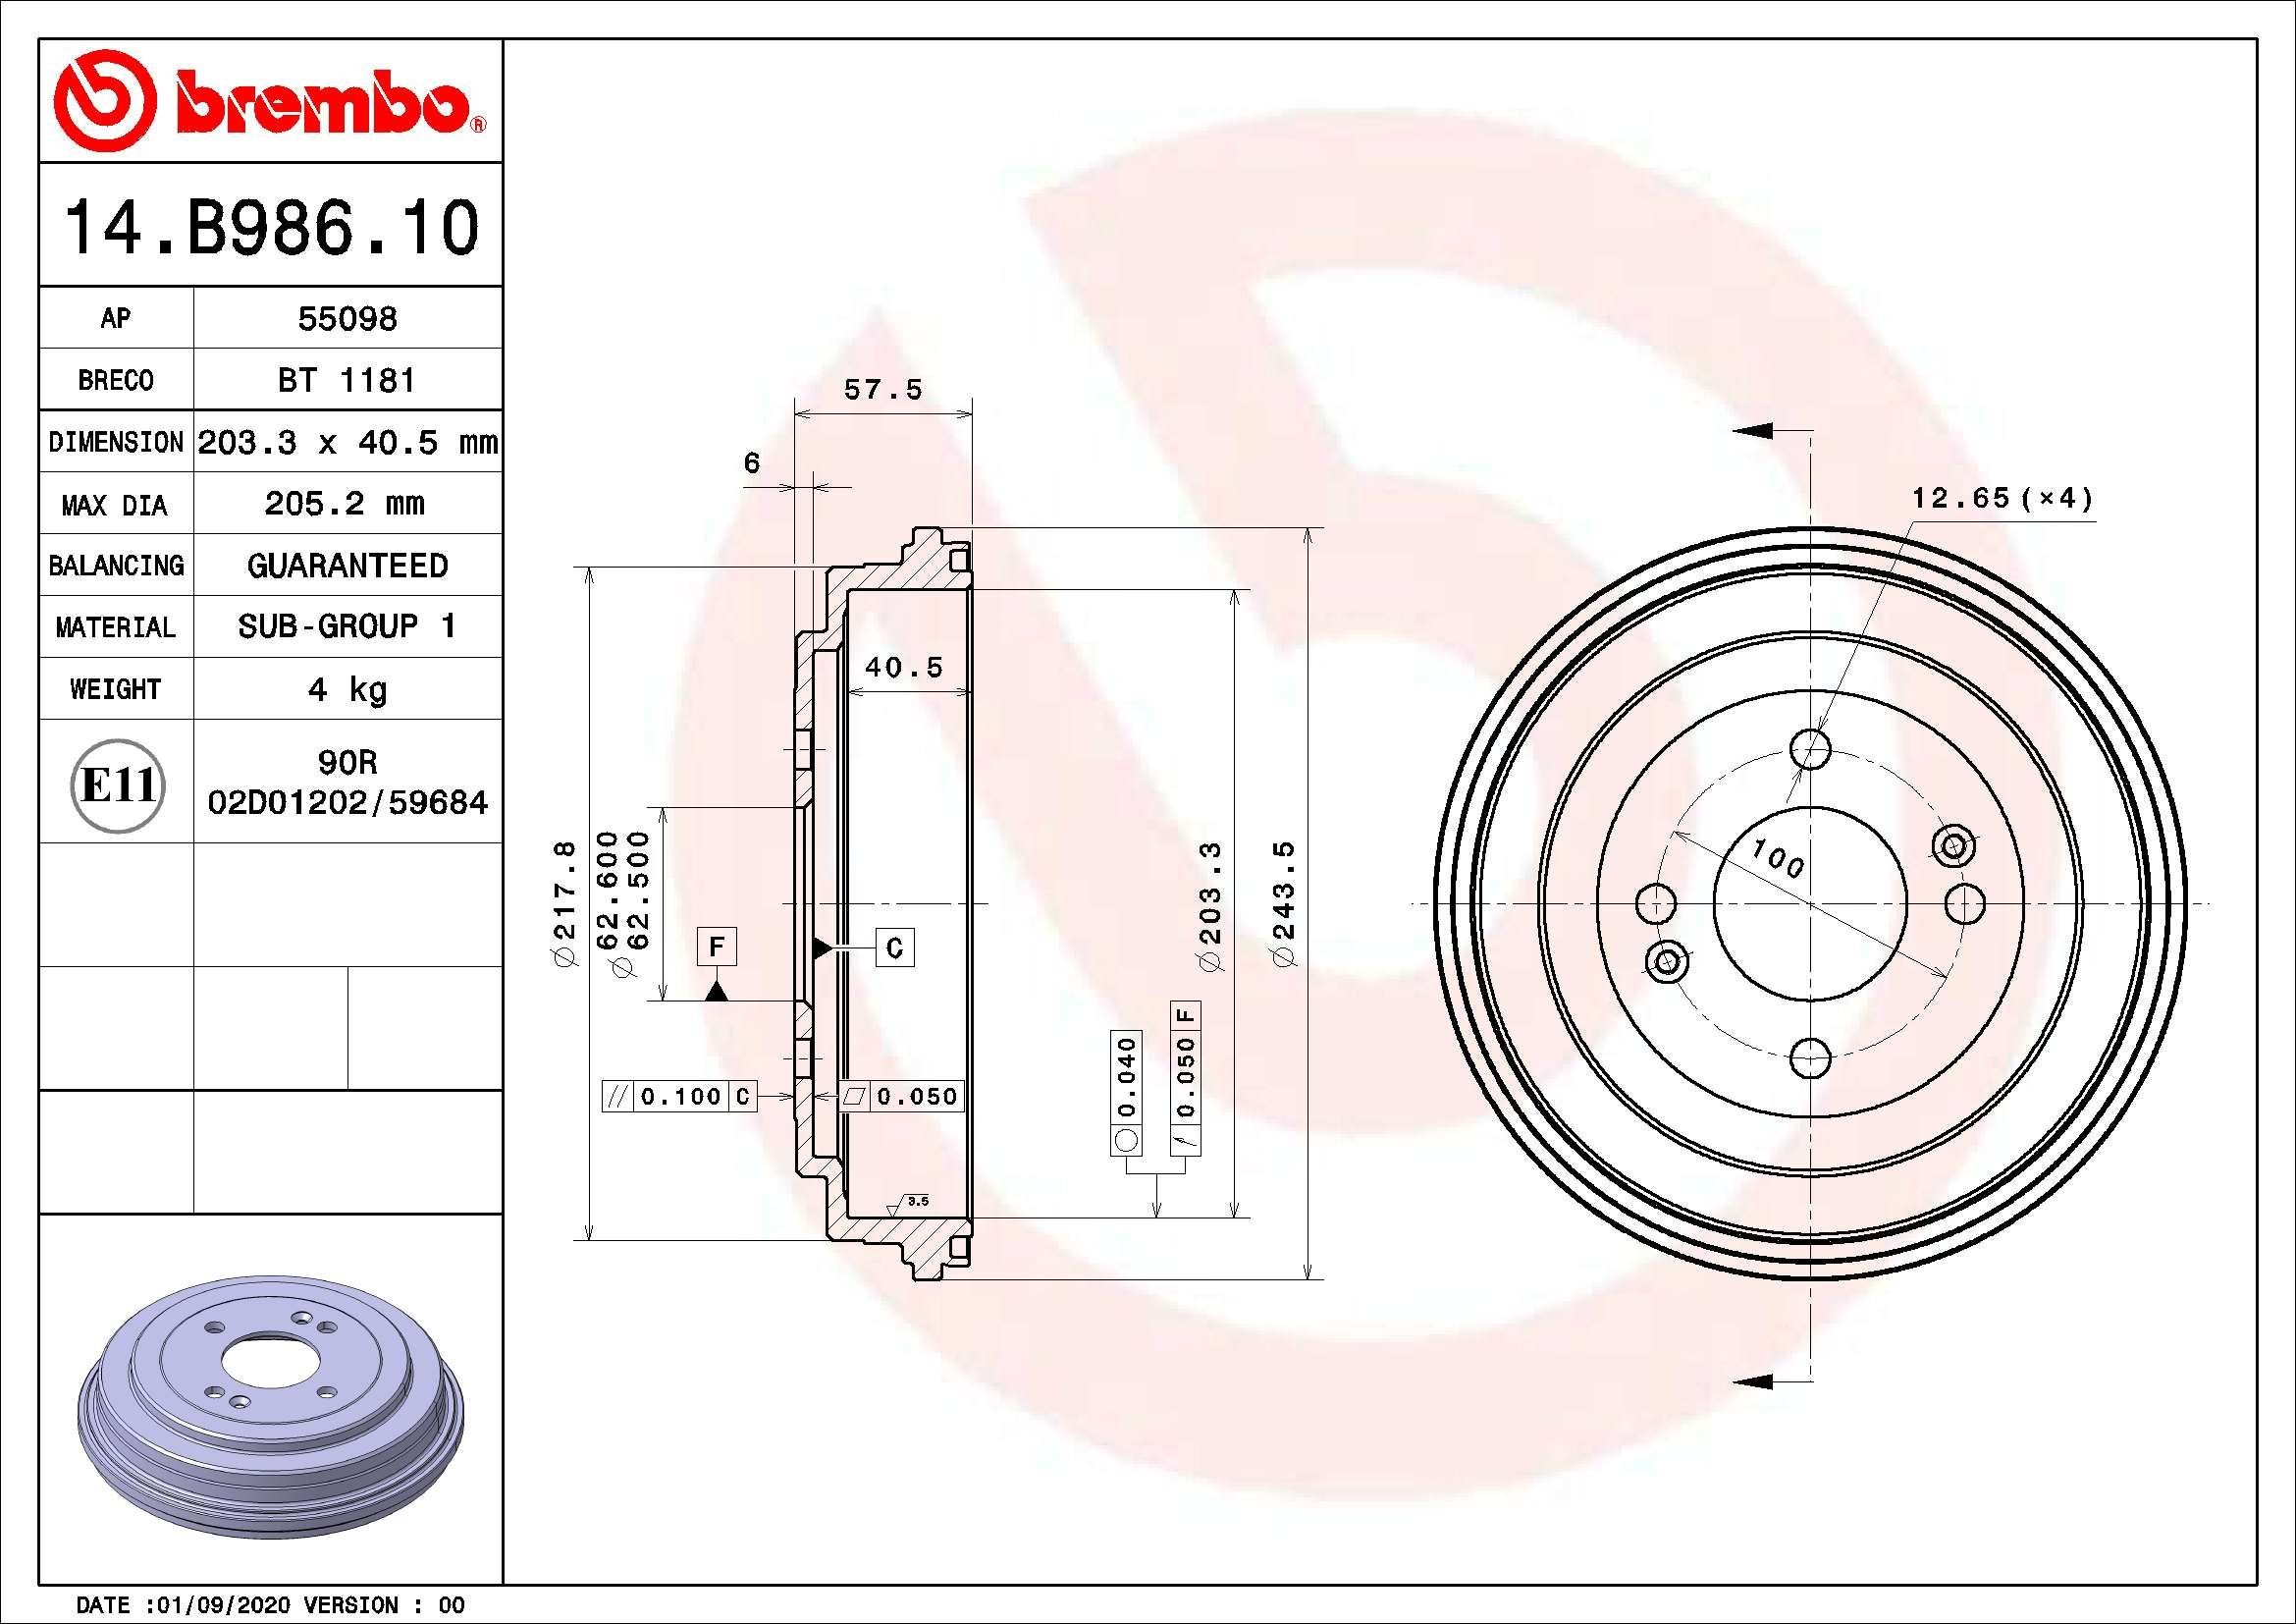 BREMBO 203,2mm Drum Brake 14.B986.10 buy